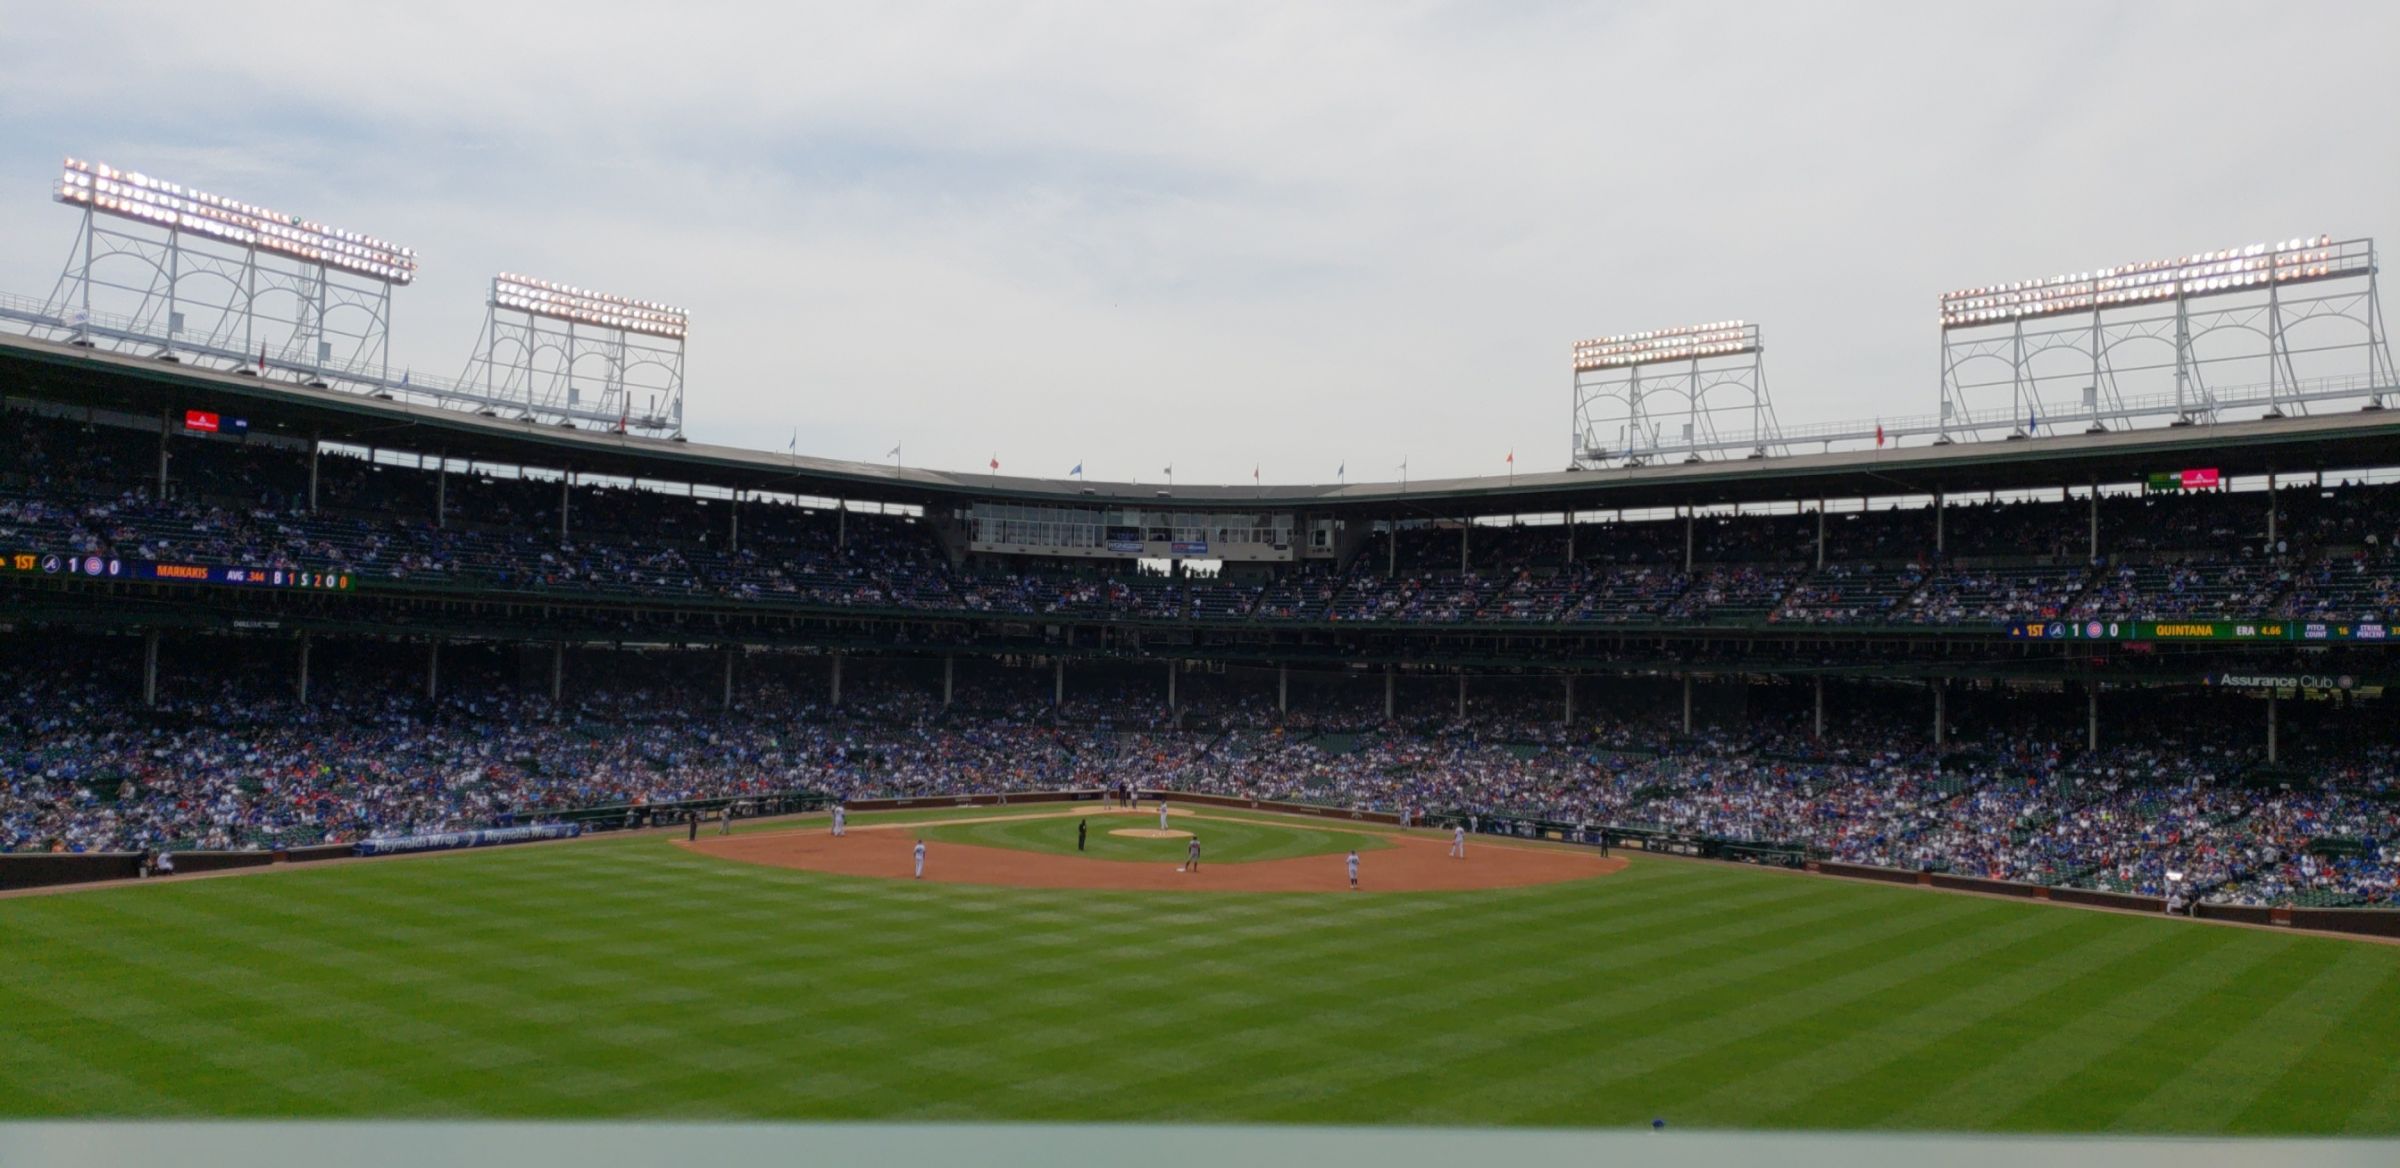 bleachers, row ga seat view  for baseball - wrigley field